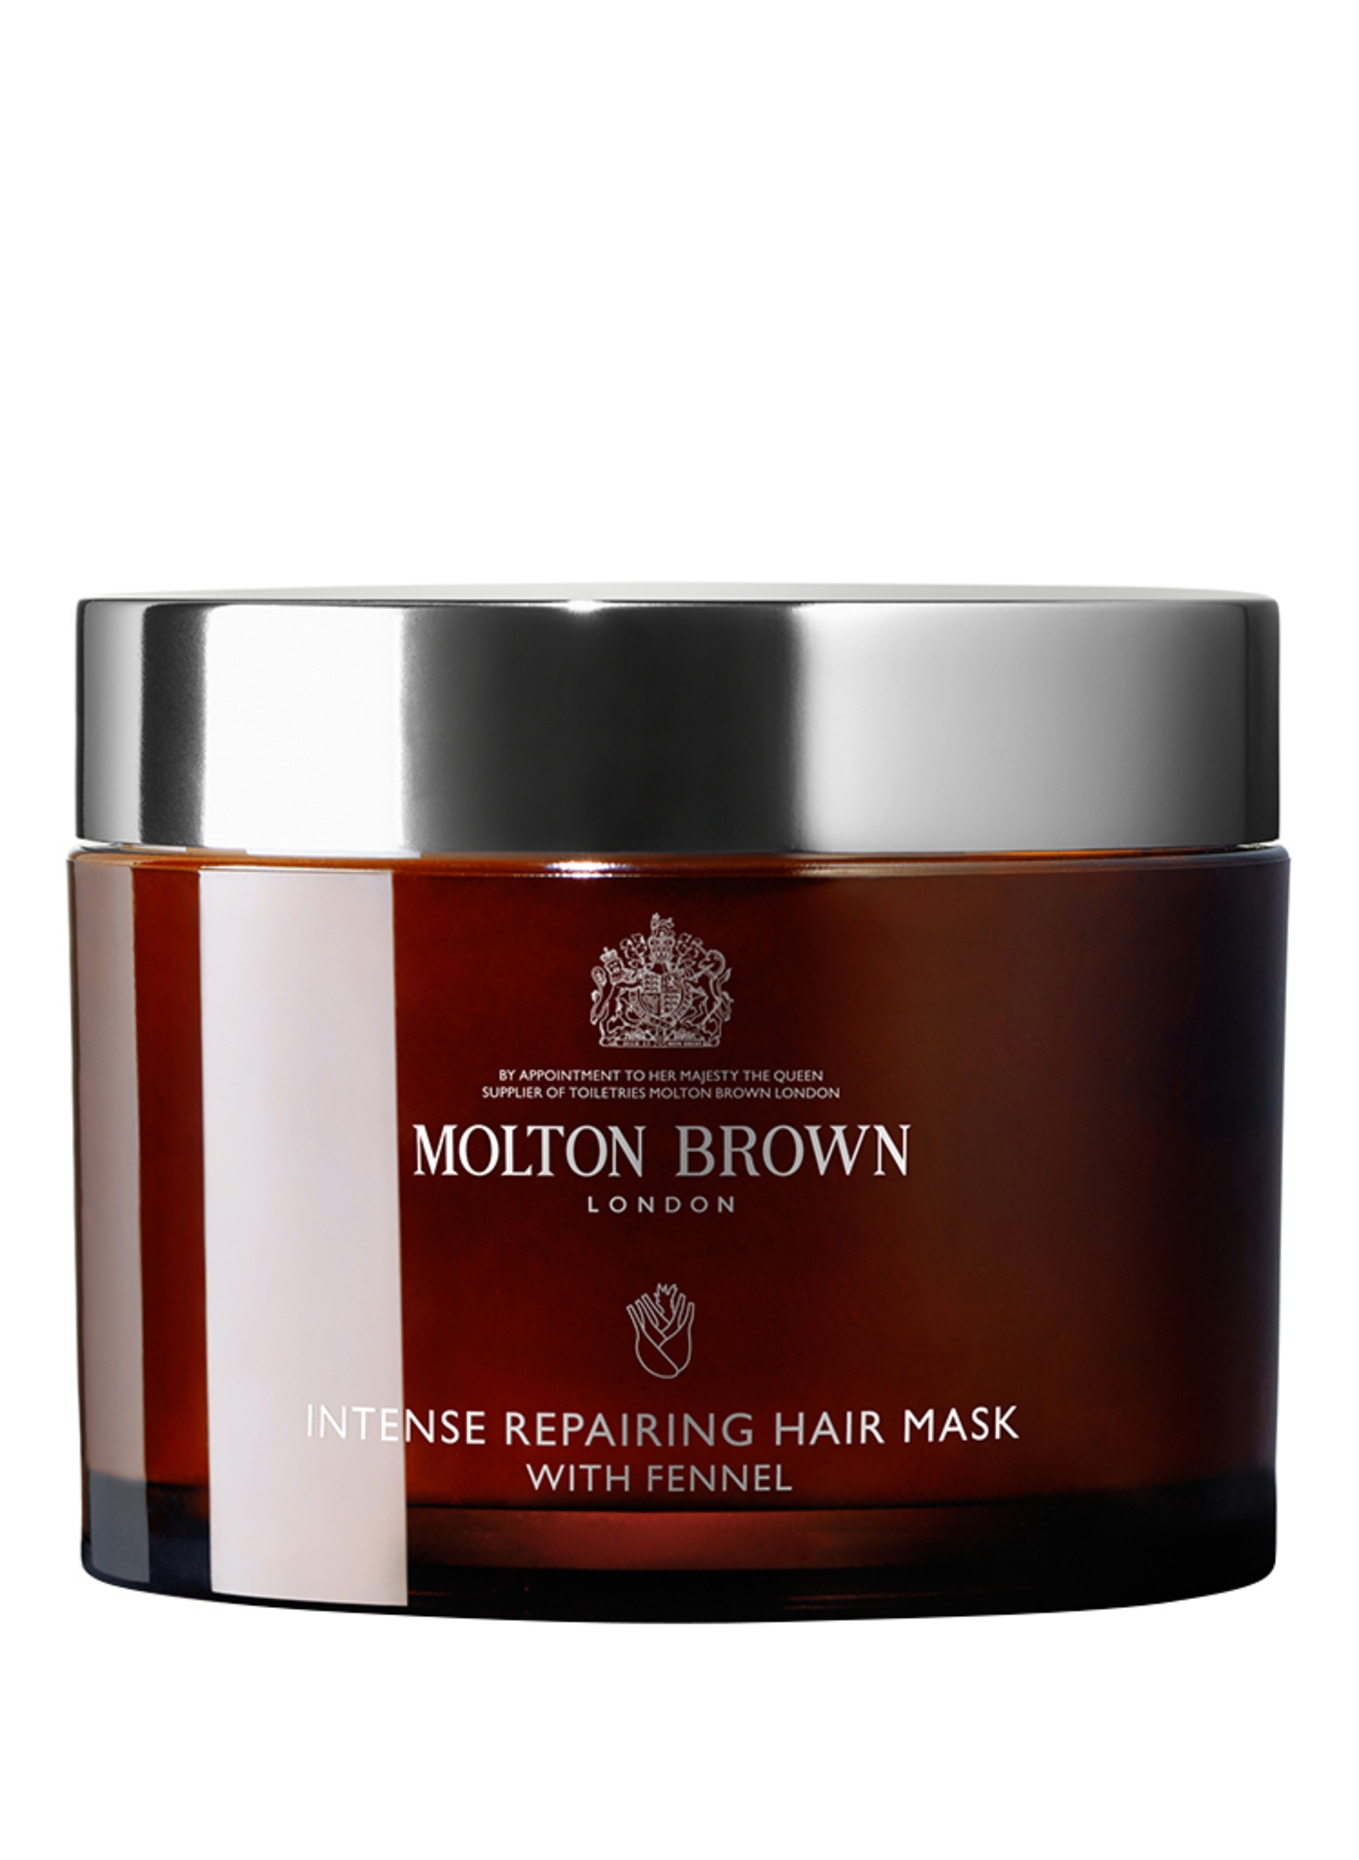 MOLTON BROWN INTENSE REPAIRING HAIR MASK WITH FENNEL (Bild 1)